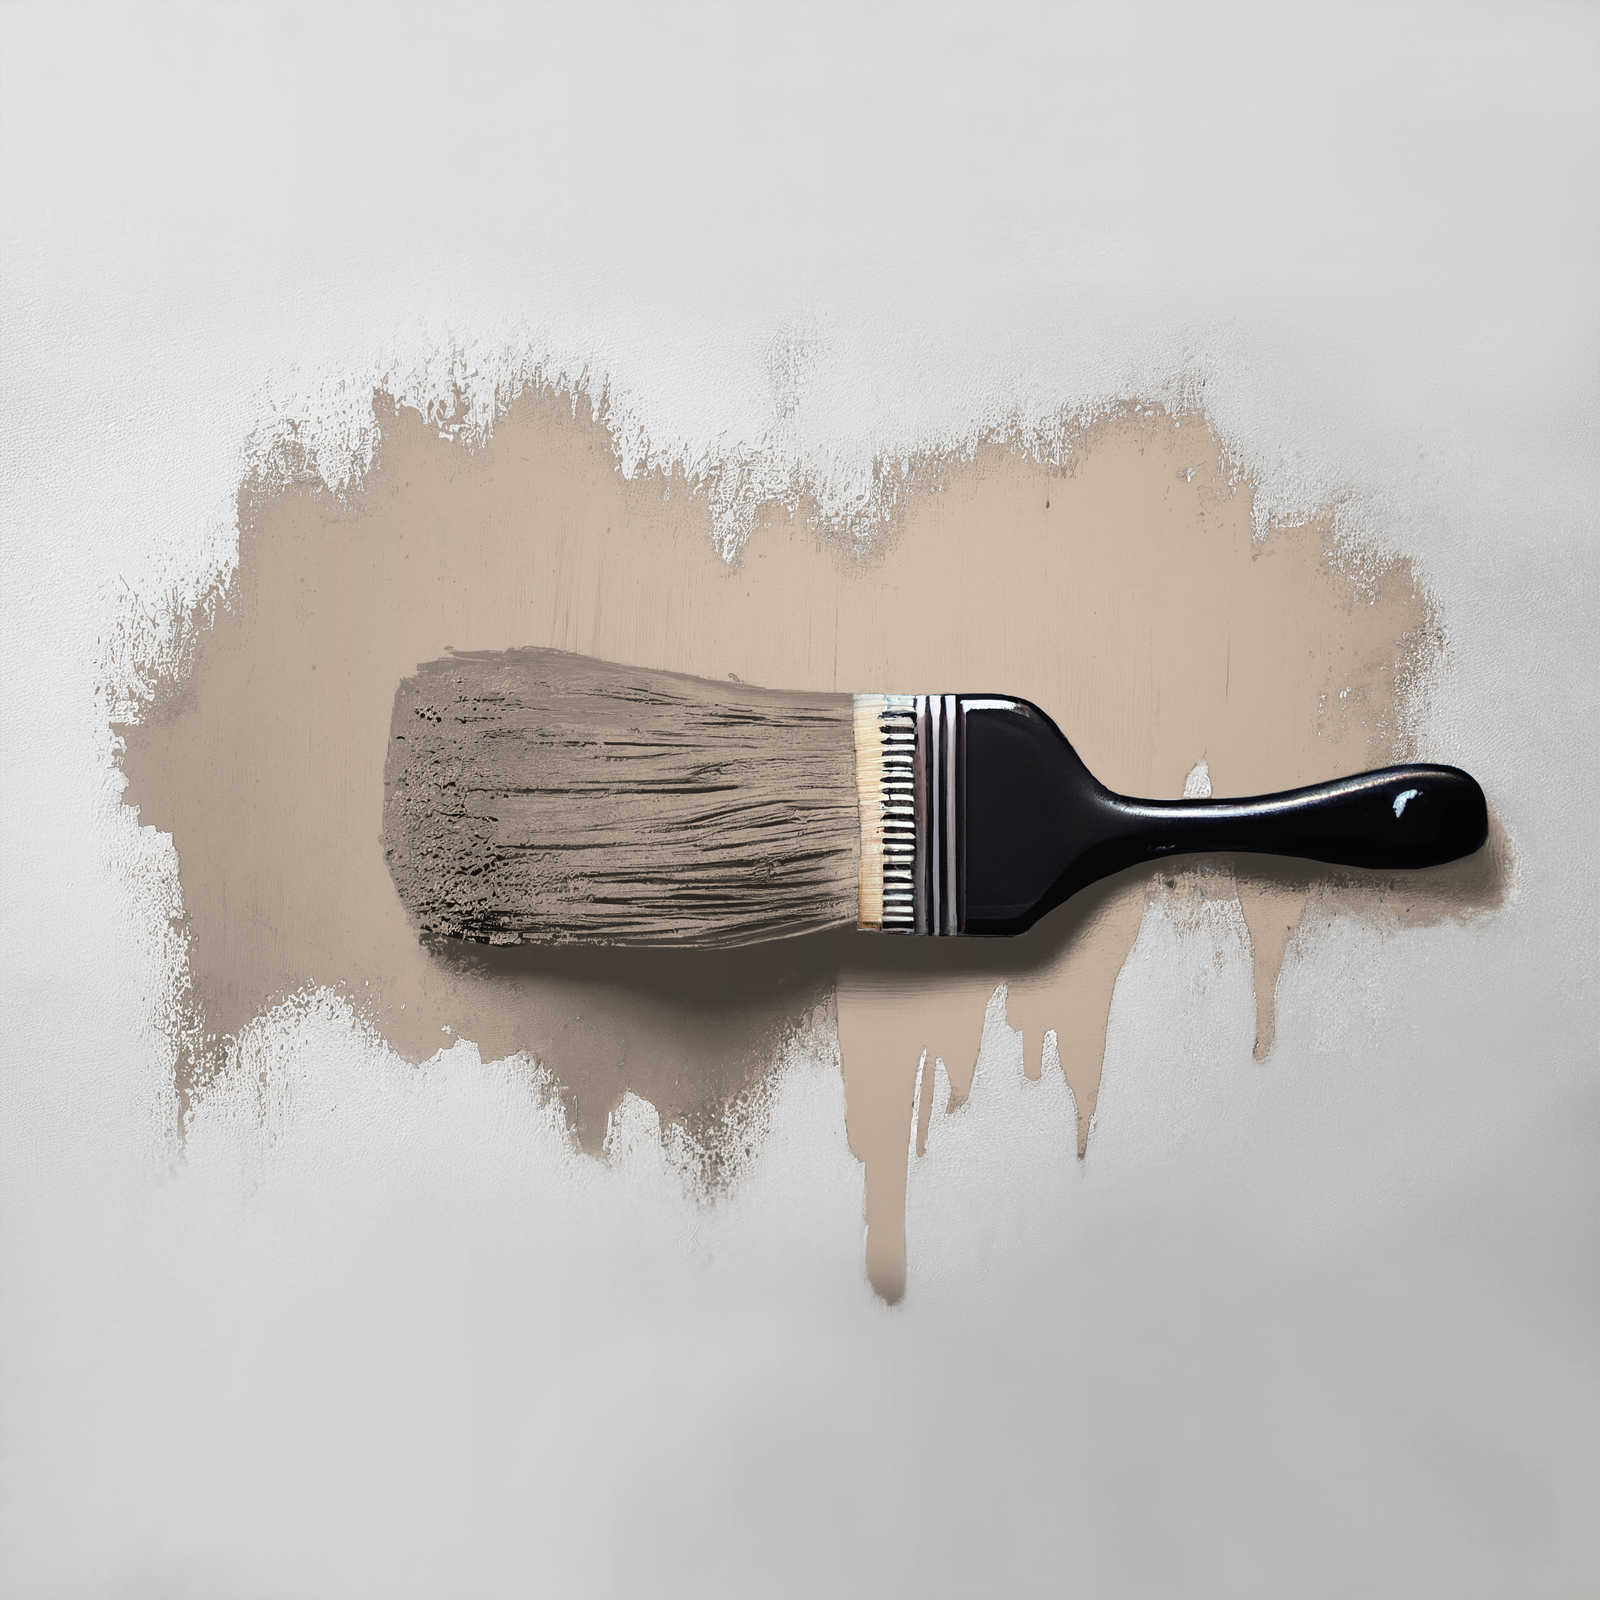             Pintura mural TCK6015 »Matte Mushroom« en beige hogareño – 5,0 litro
        